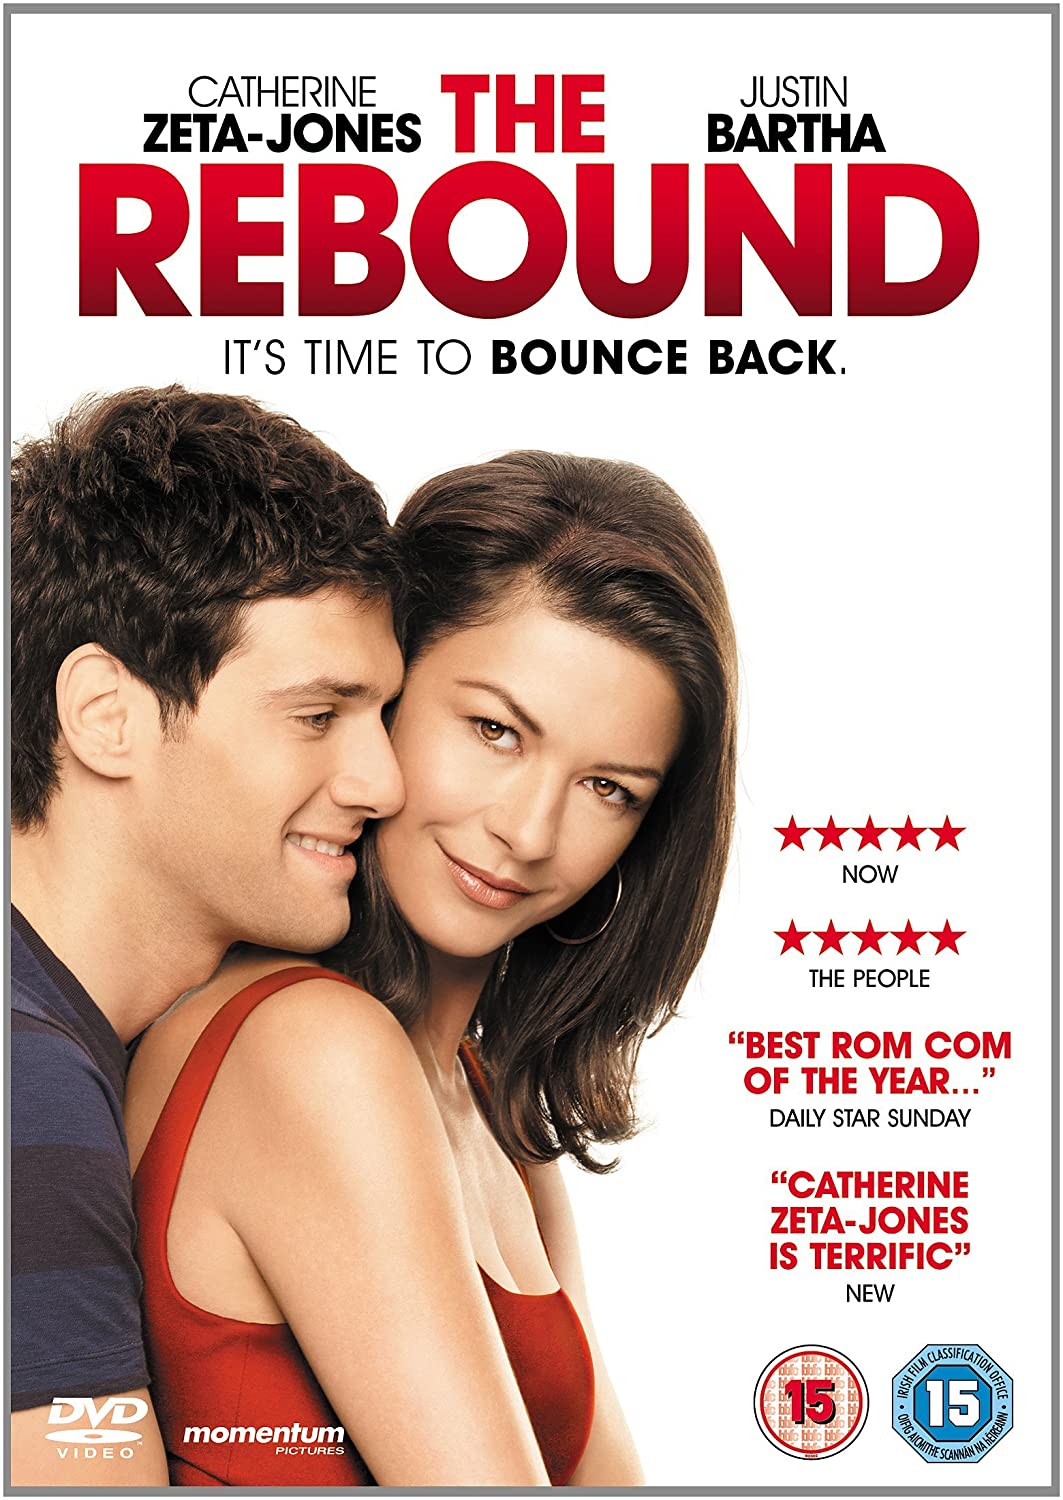 Stiahni si HD Filmy Sexy 40 / The Rebound(2009)(CZ)(1080p) = CSFD 65%